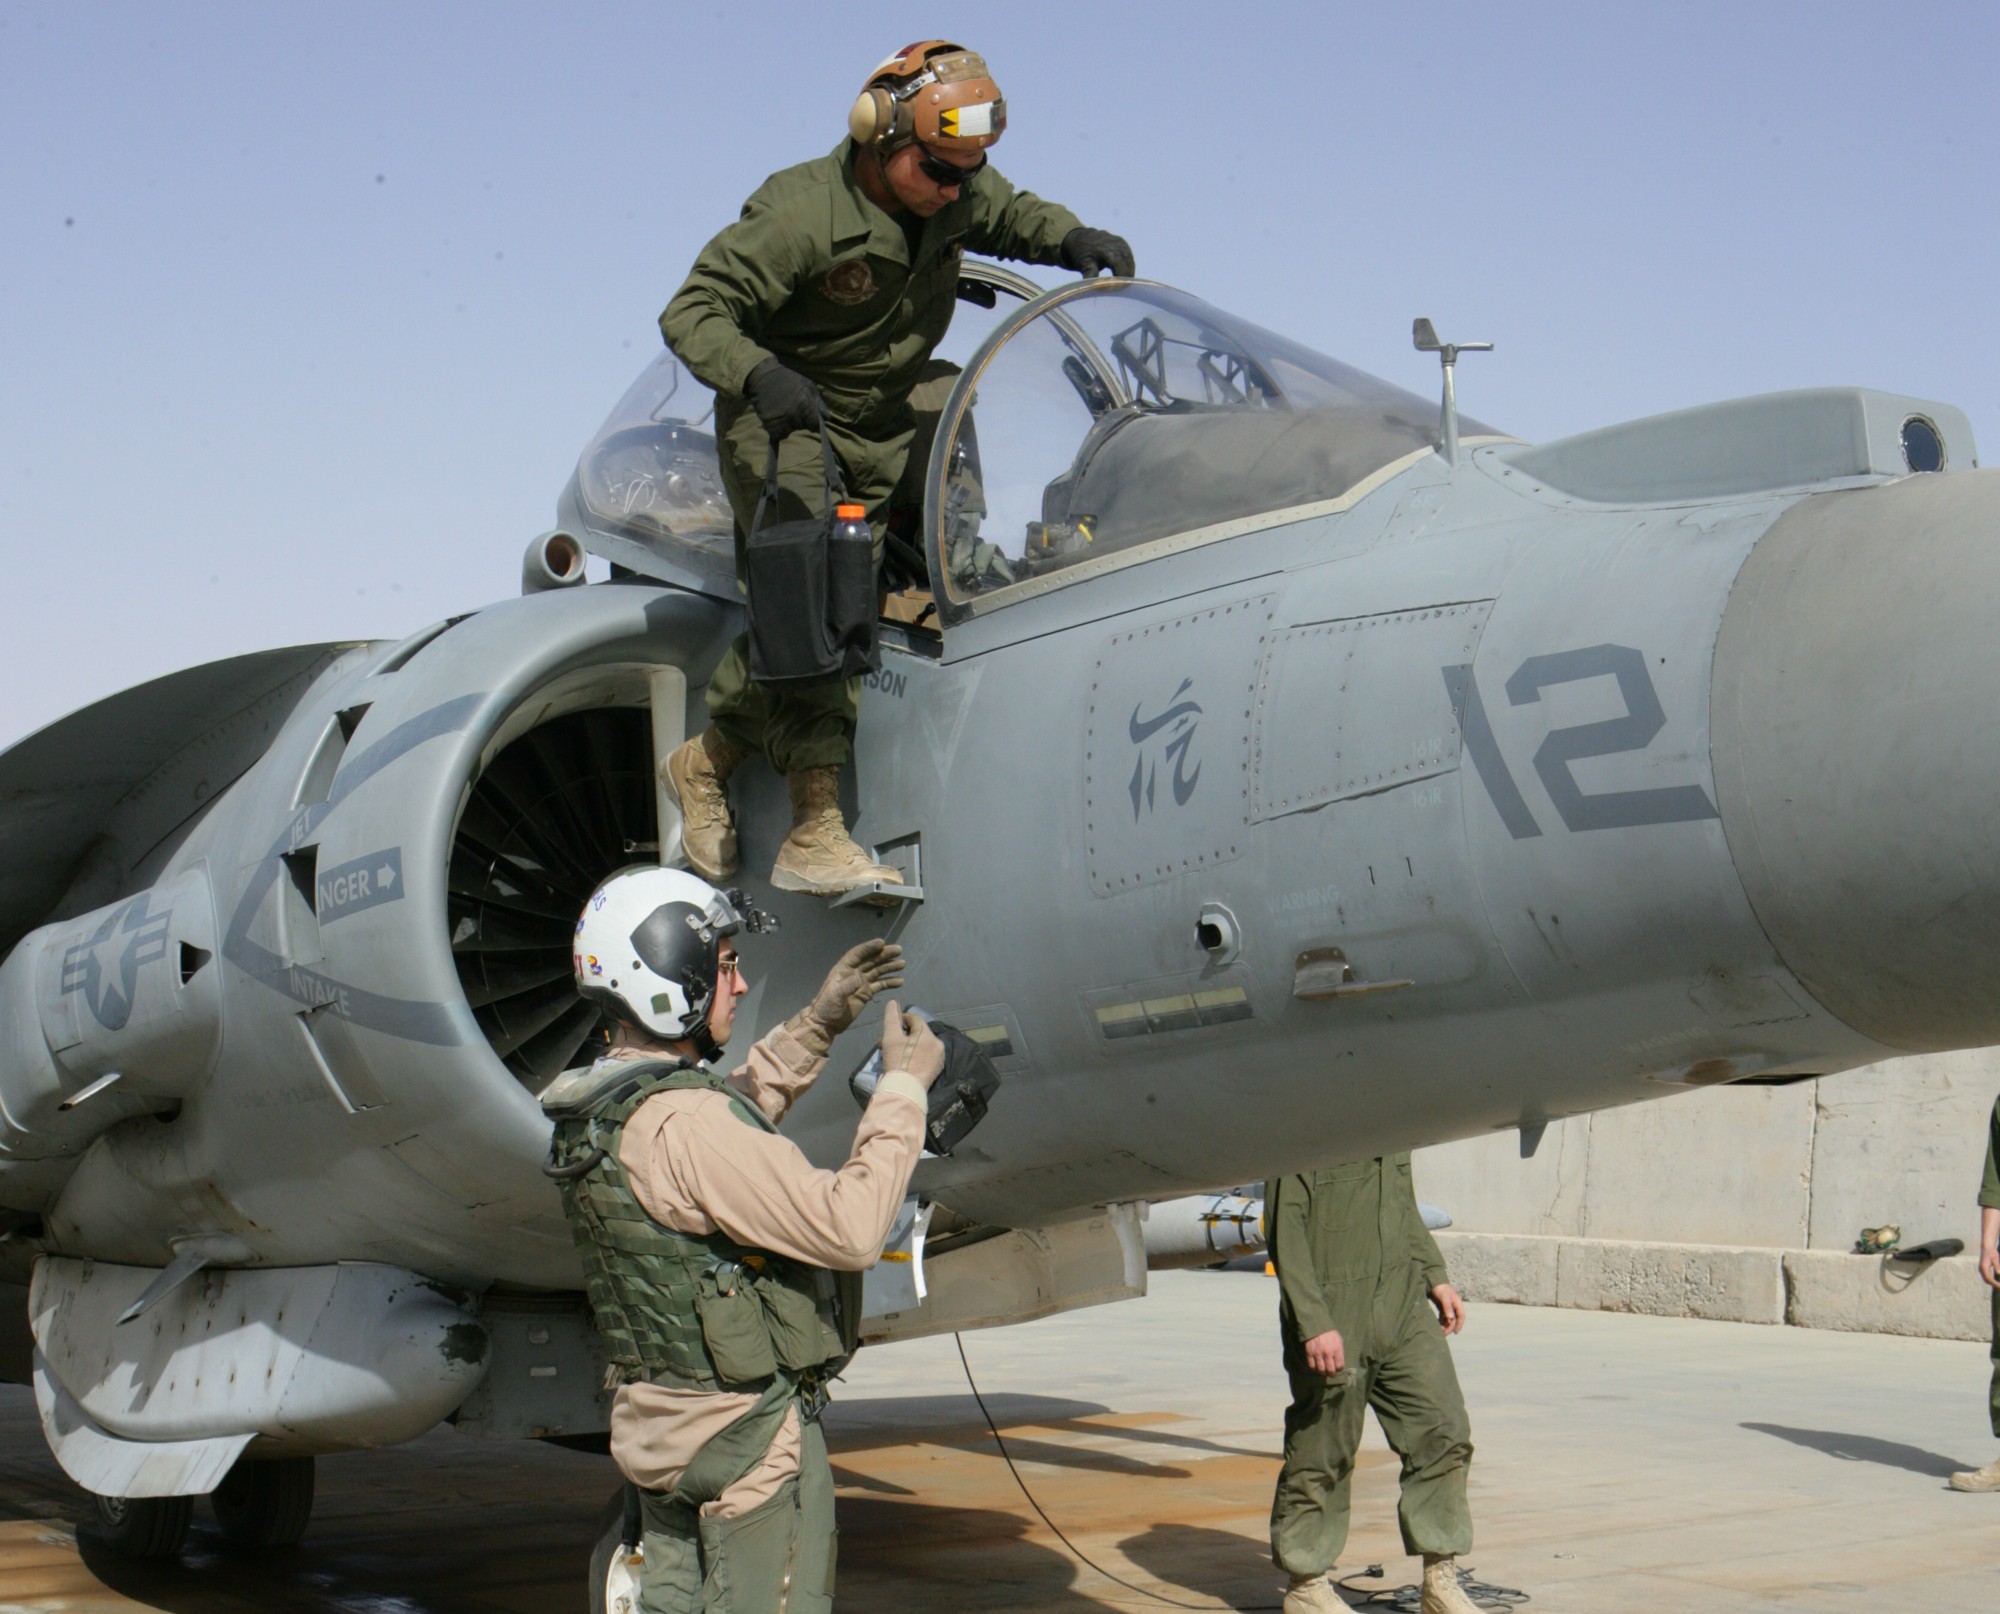 vma-542 tigers marine attack squadron usmc av-8b harrier ii al asad airbase iraq 24